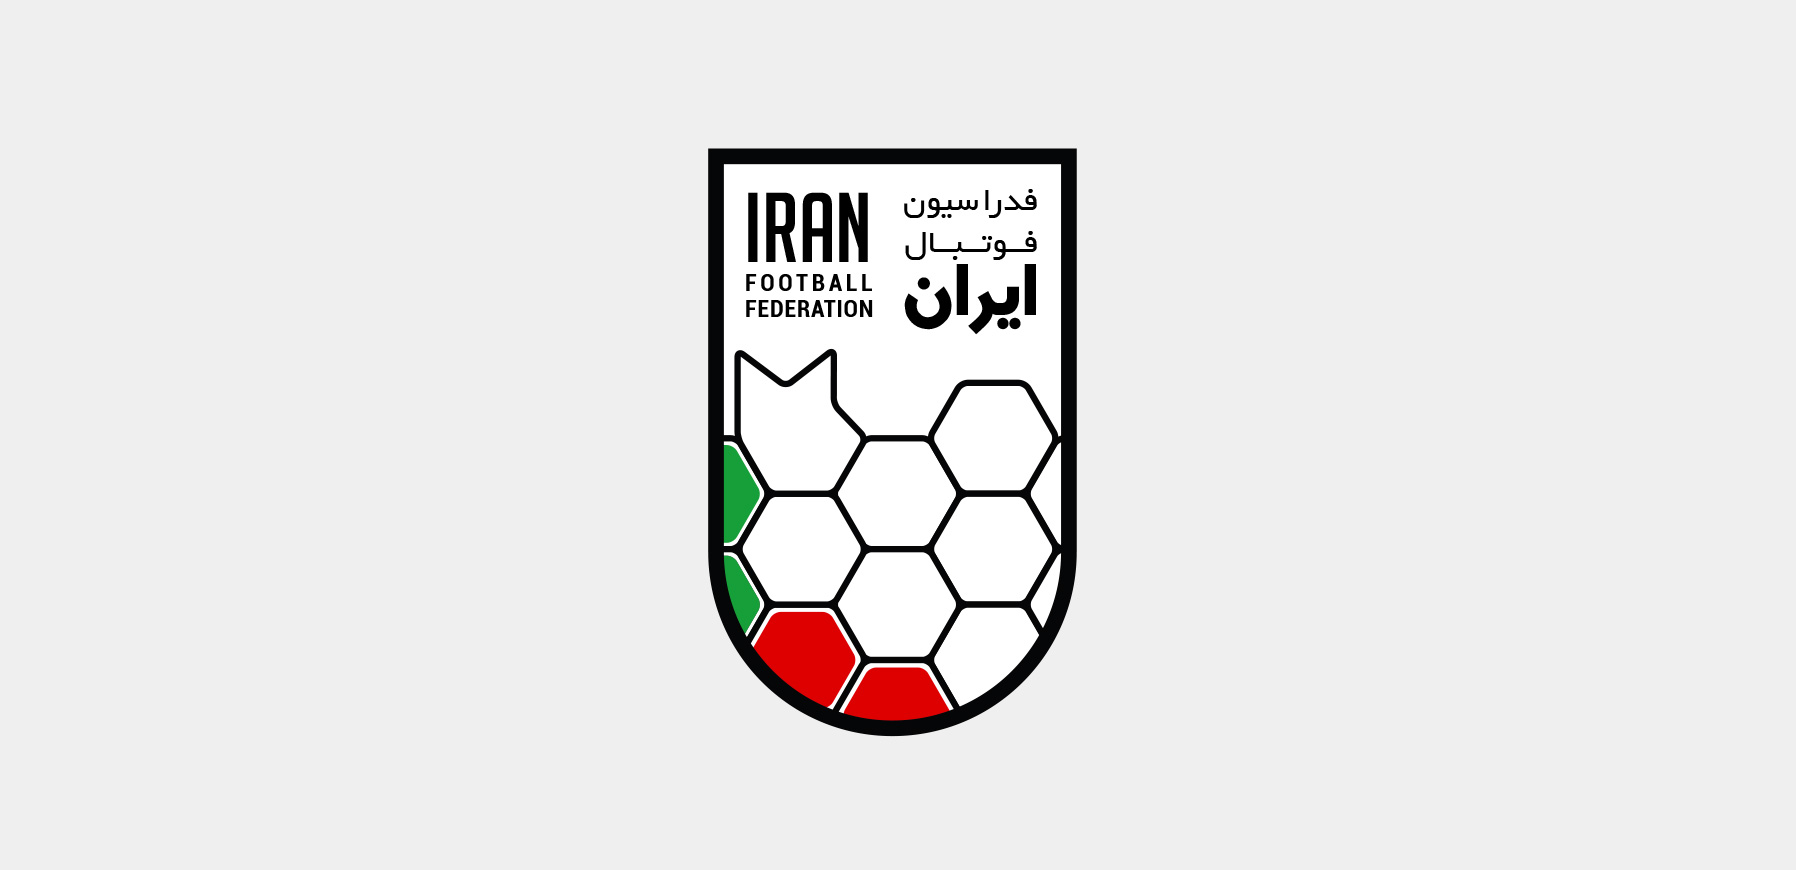 Лого сборной Ирана по футболу